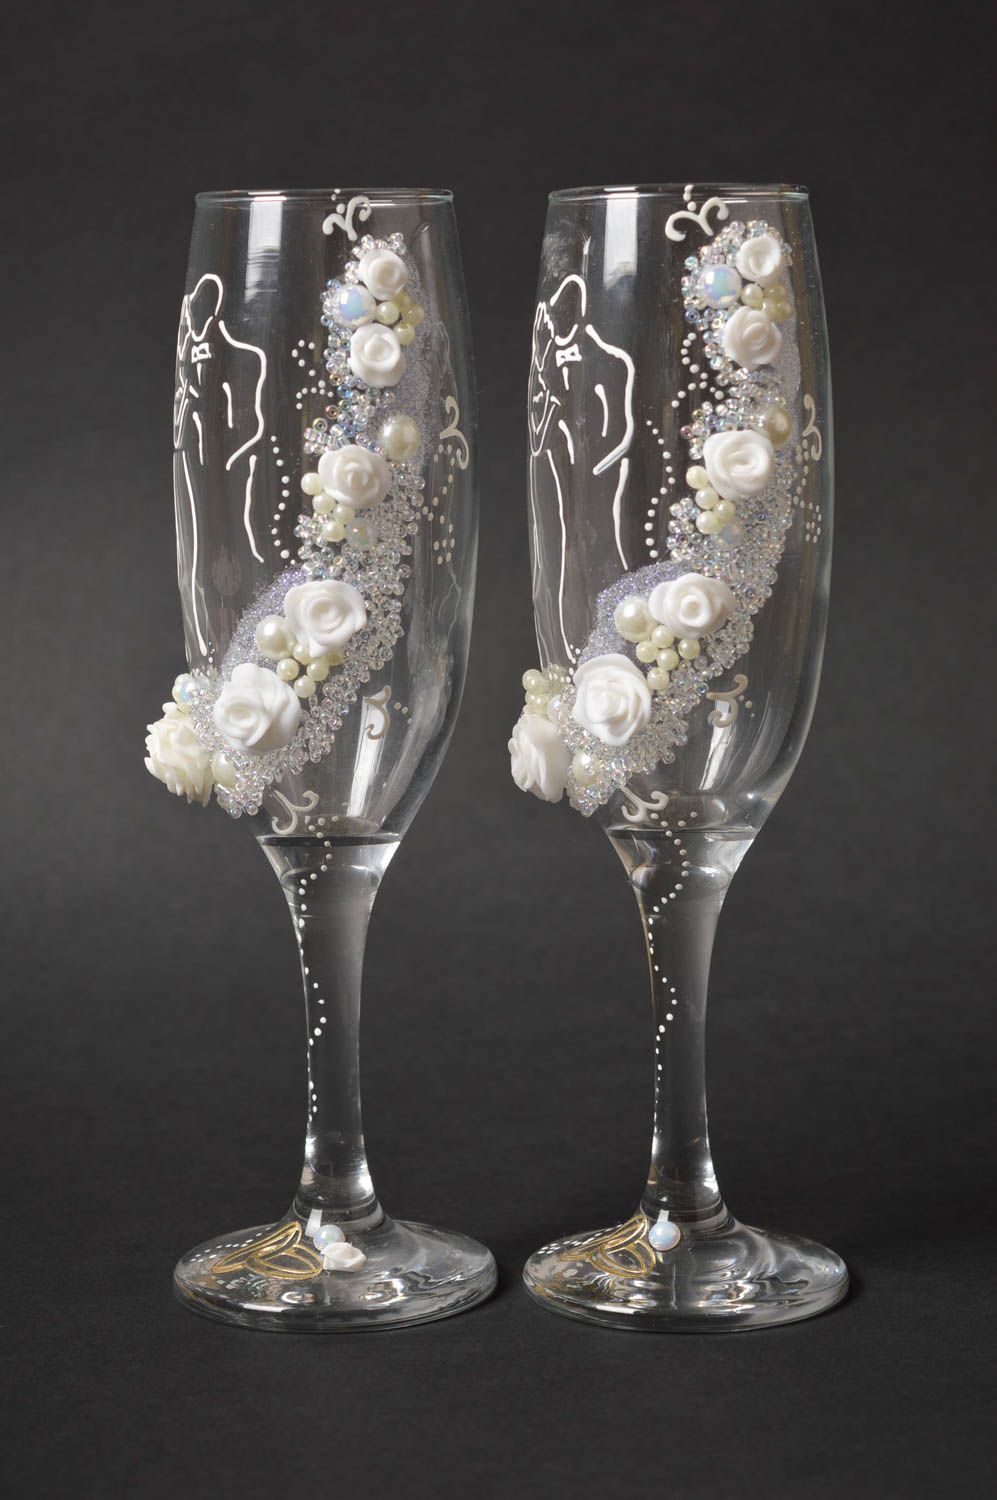 Handmade wedding decor wedding glasses champagne glasses hand painted glasses photo 2